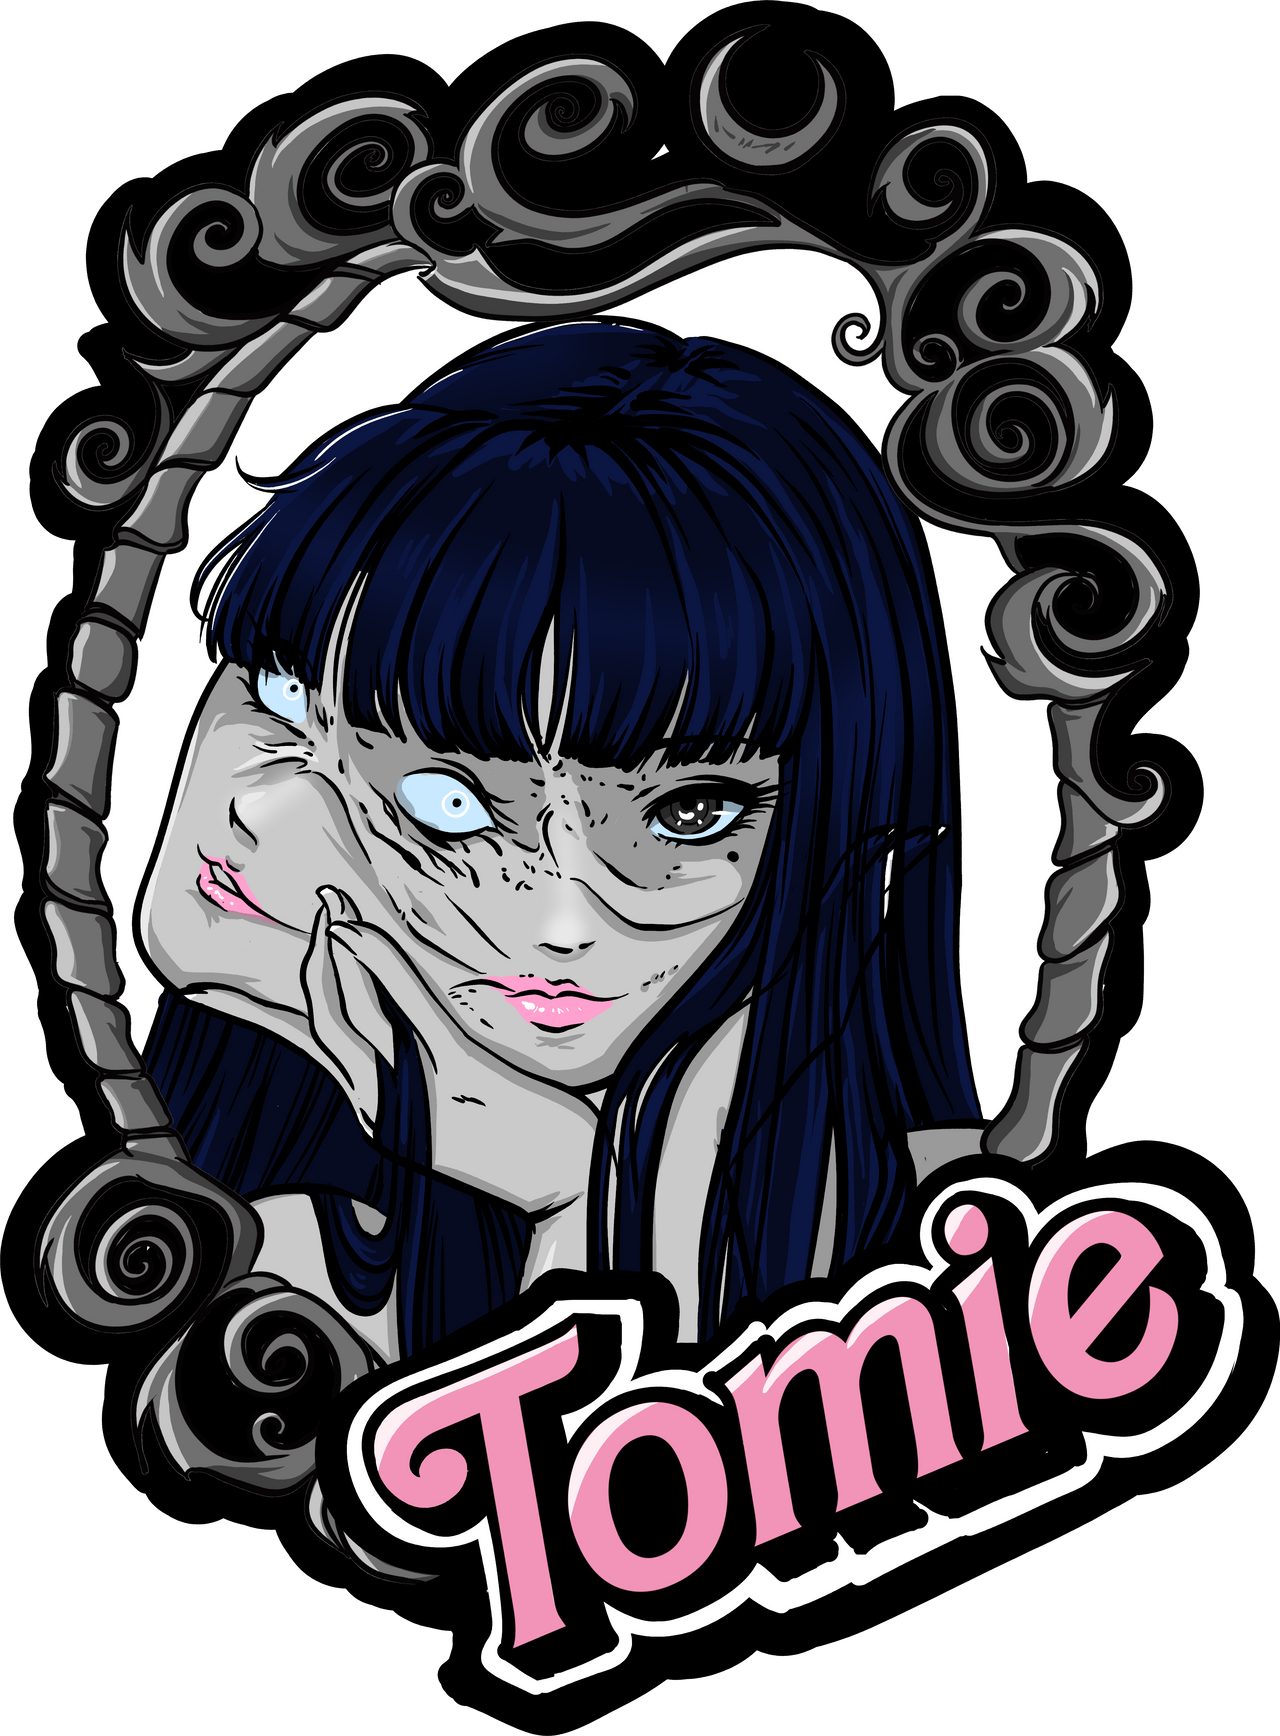 Tomie - Junji Ito - Anime Style (My Version) by TonyGG7 on DeviantArt